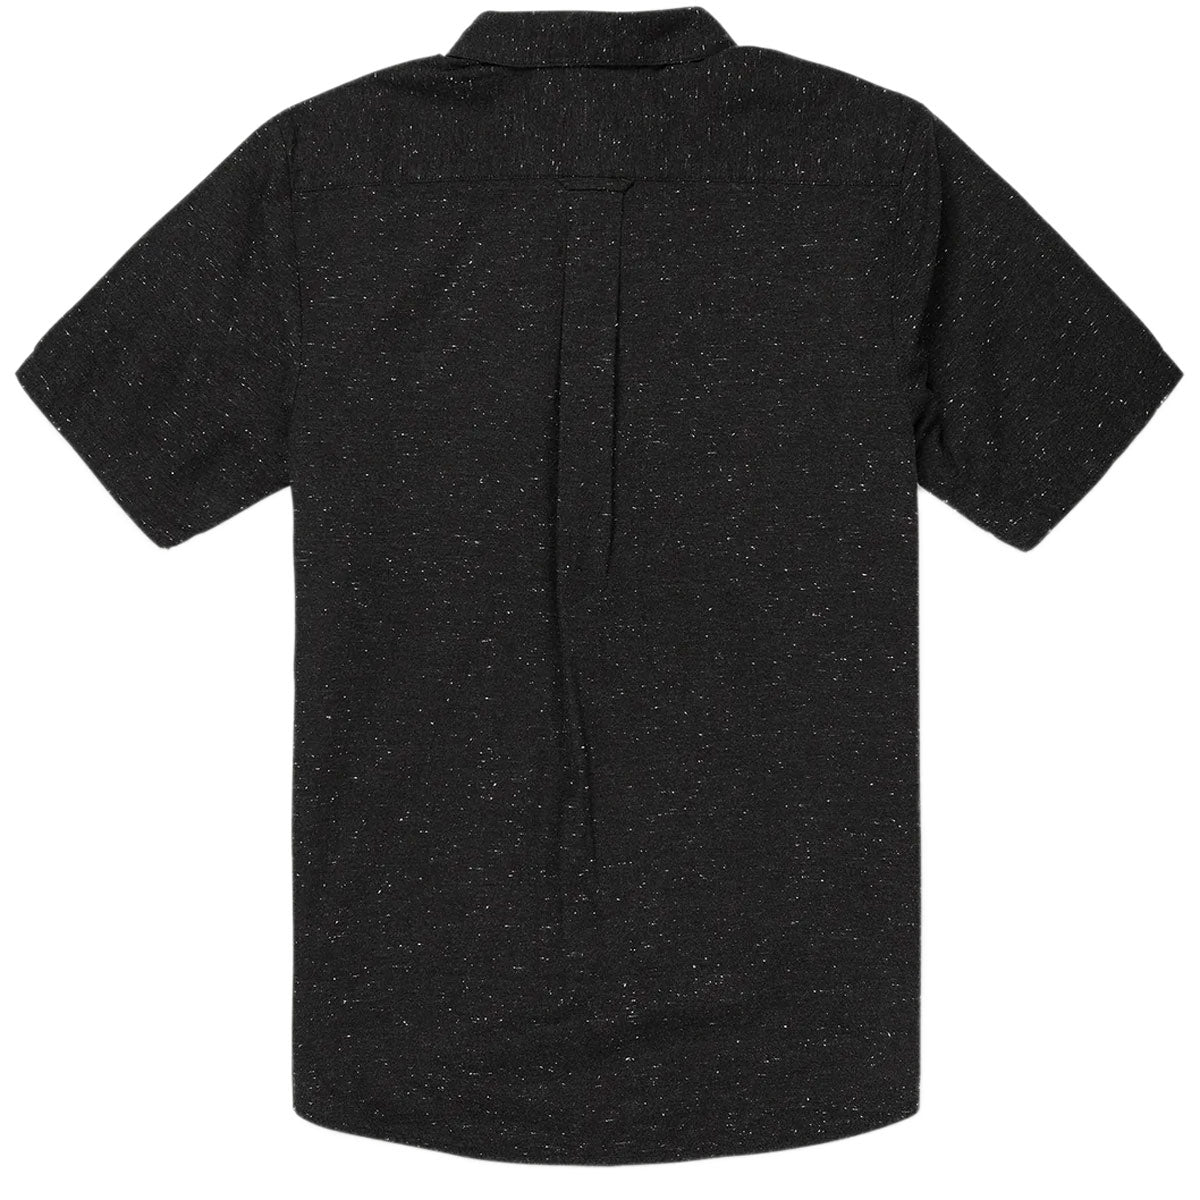 Volcom Date Knight Shirt - Black image 2